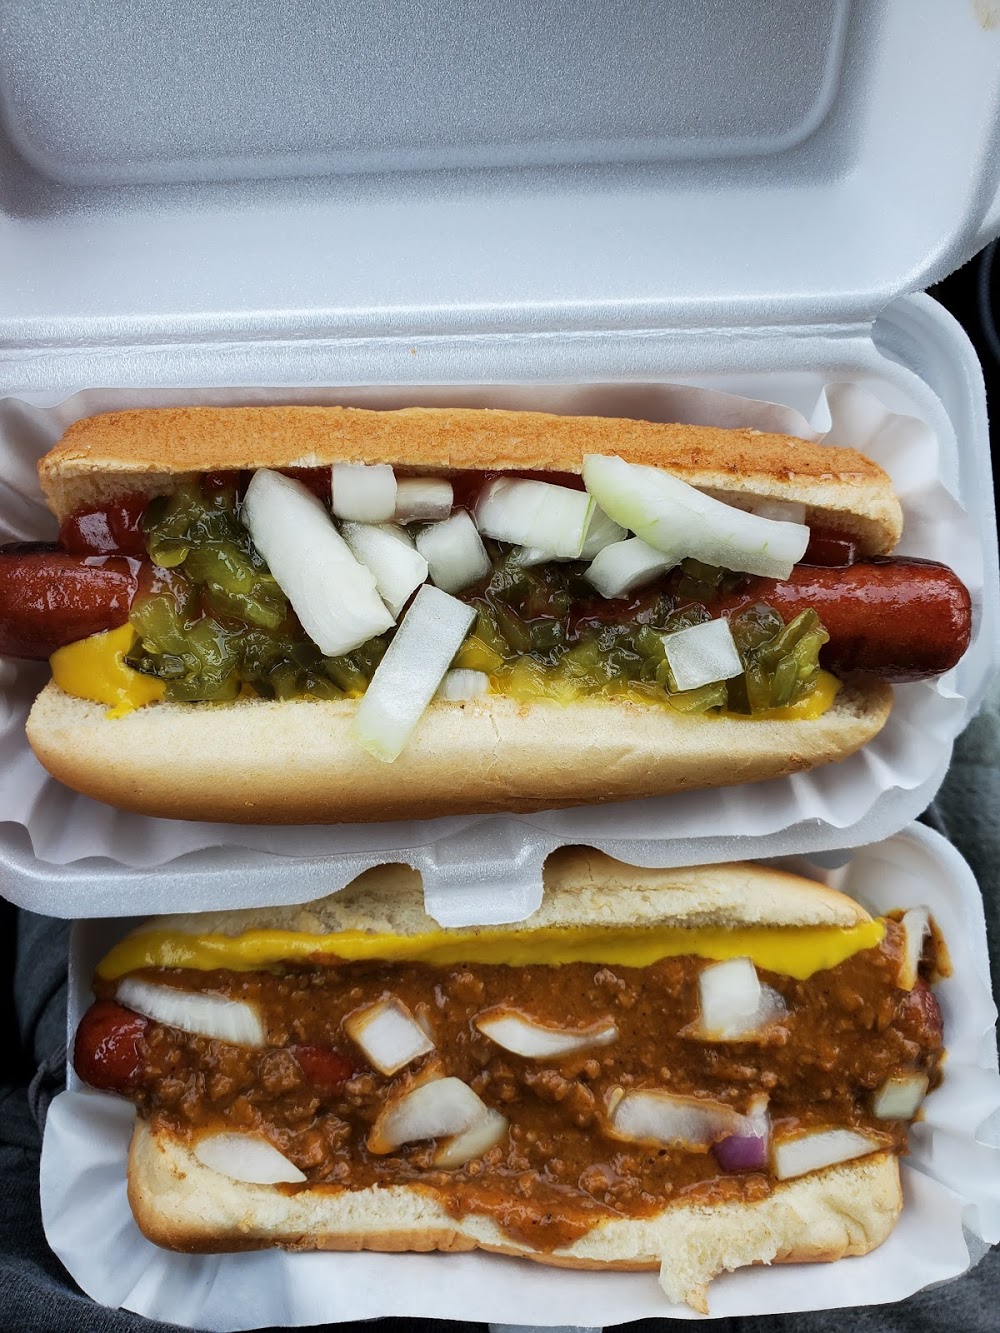 Coney Island Hot Dogs